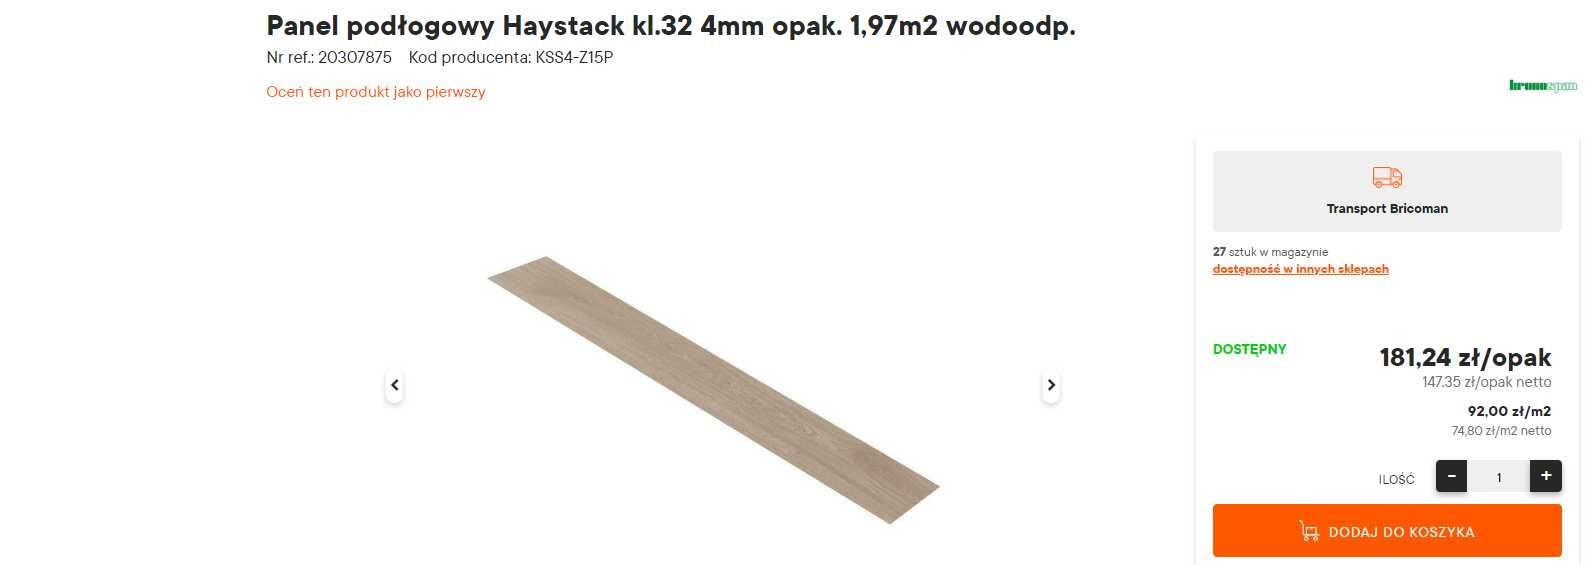 Panel podłogowy Haystack kl.32 4mm opak. 1,97m2 wodoodp.